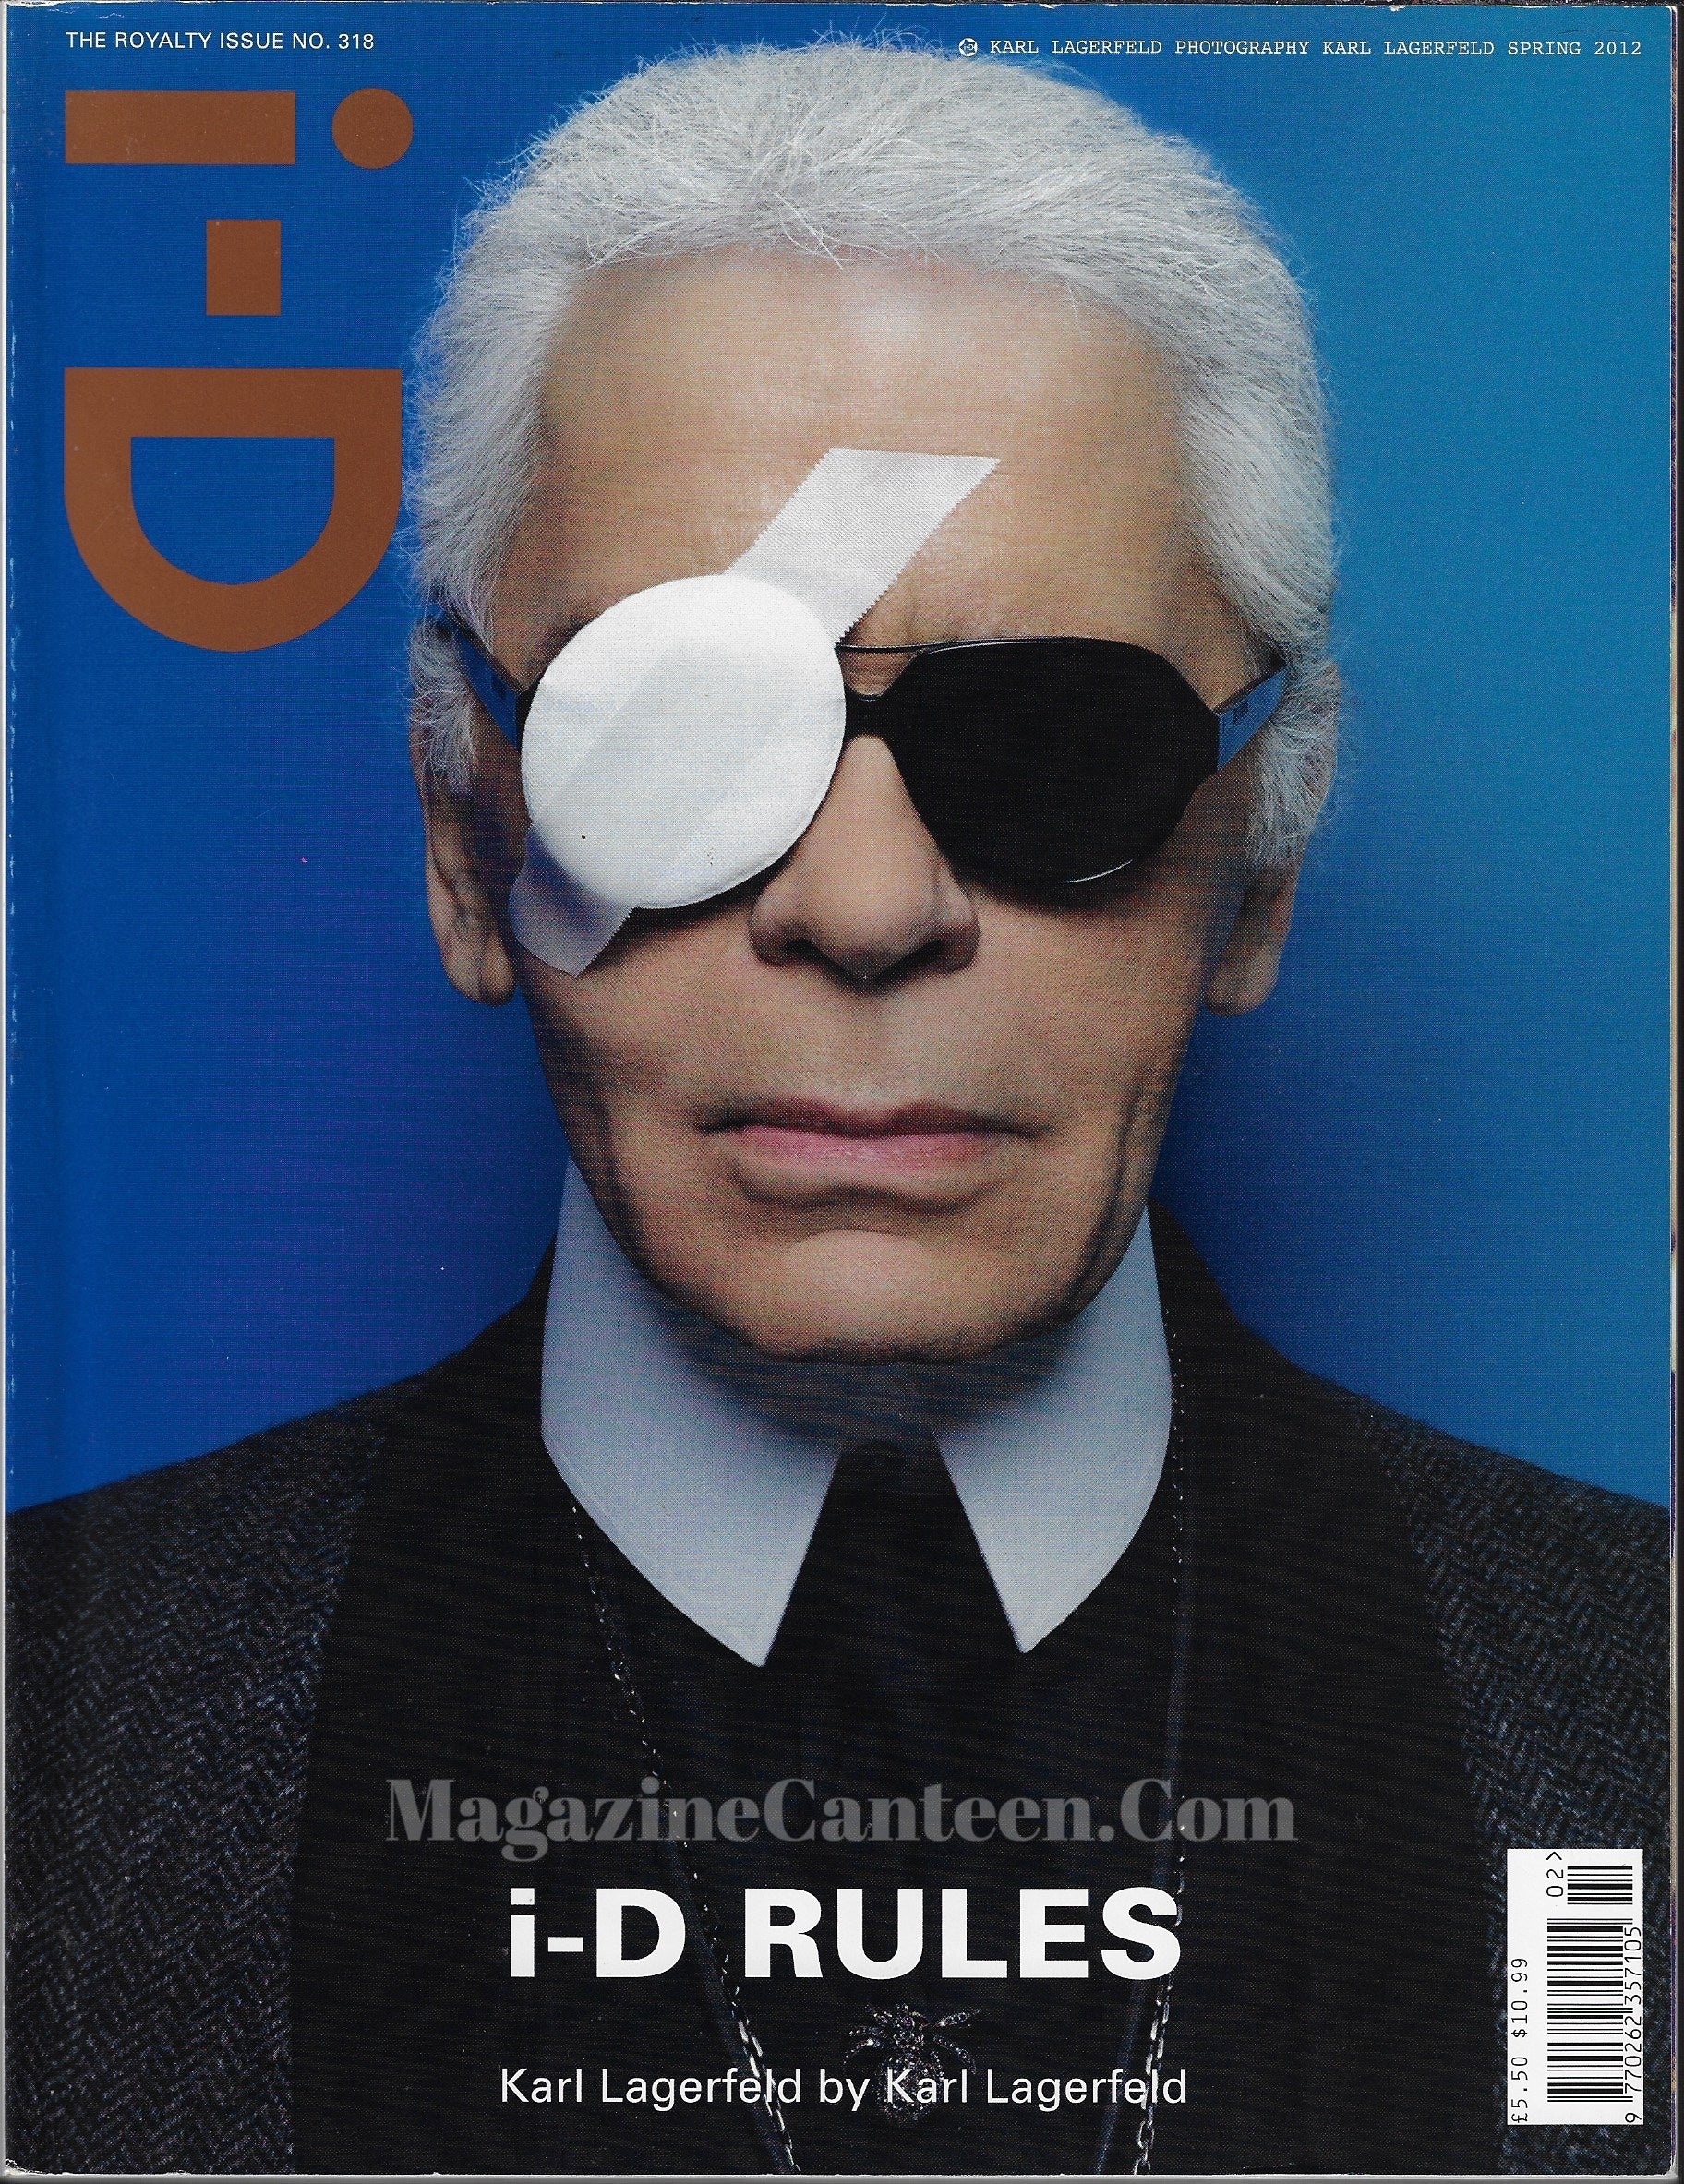 I-D Magazine 318 - Karl Lagerfeld 2012